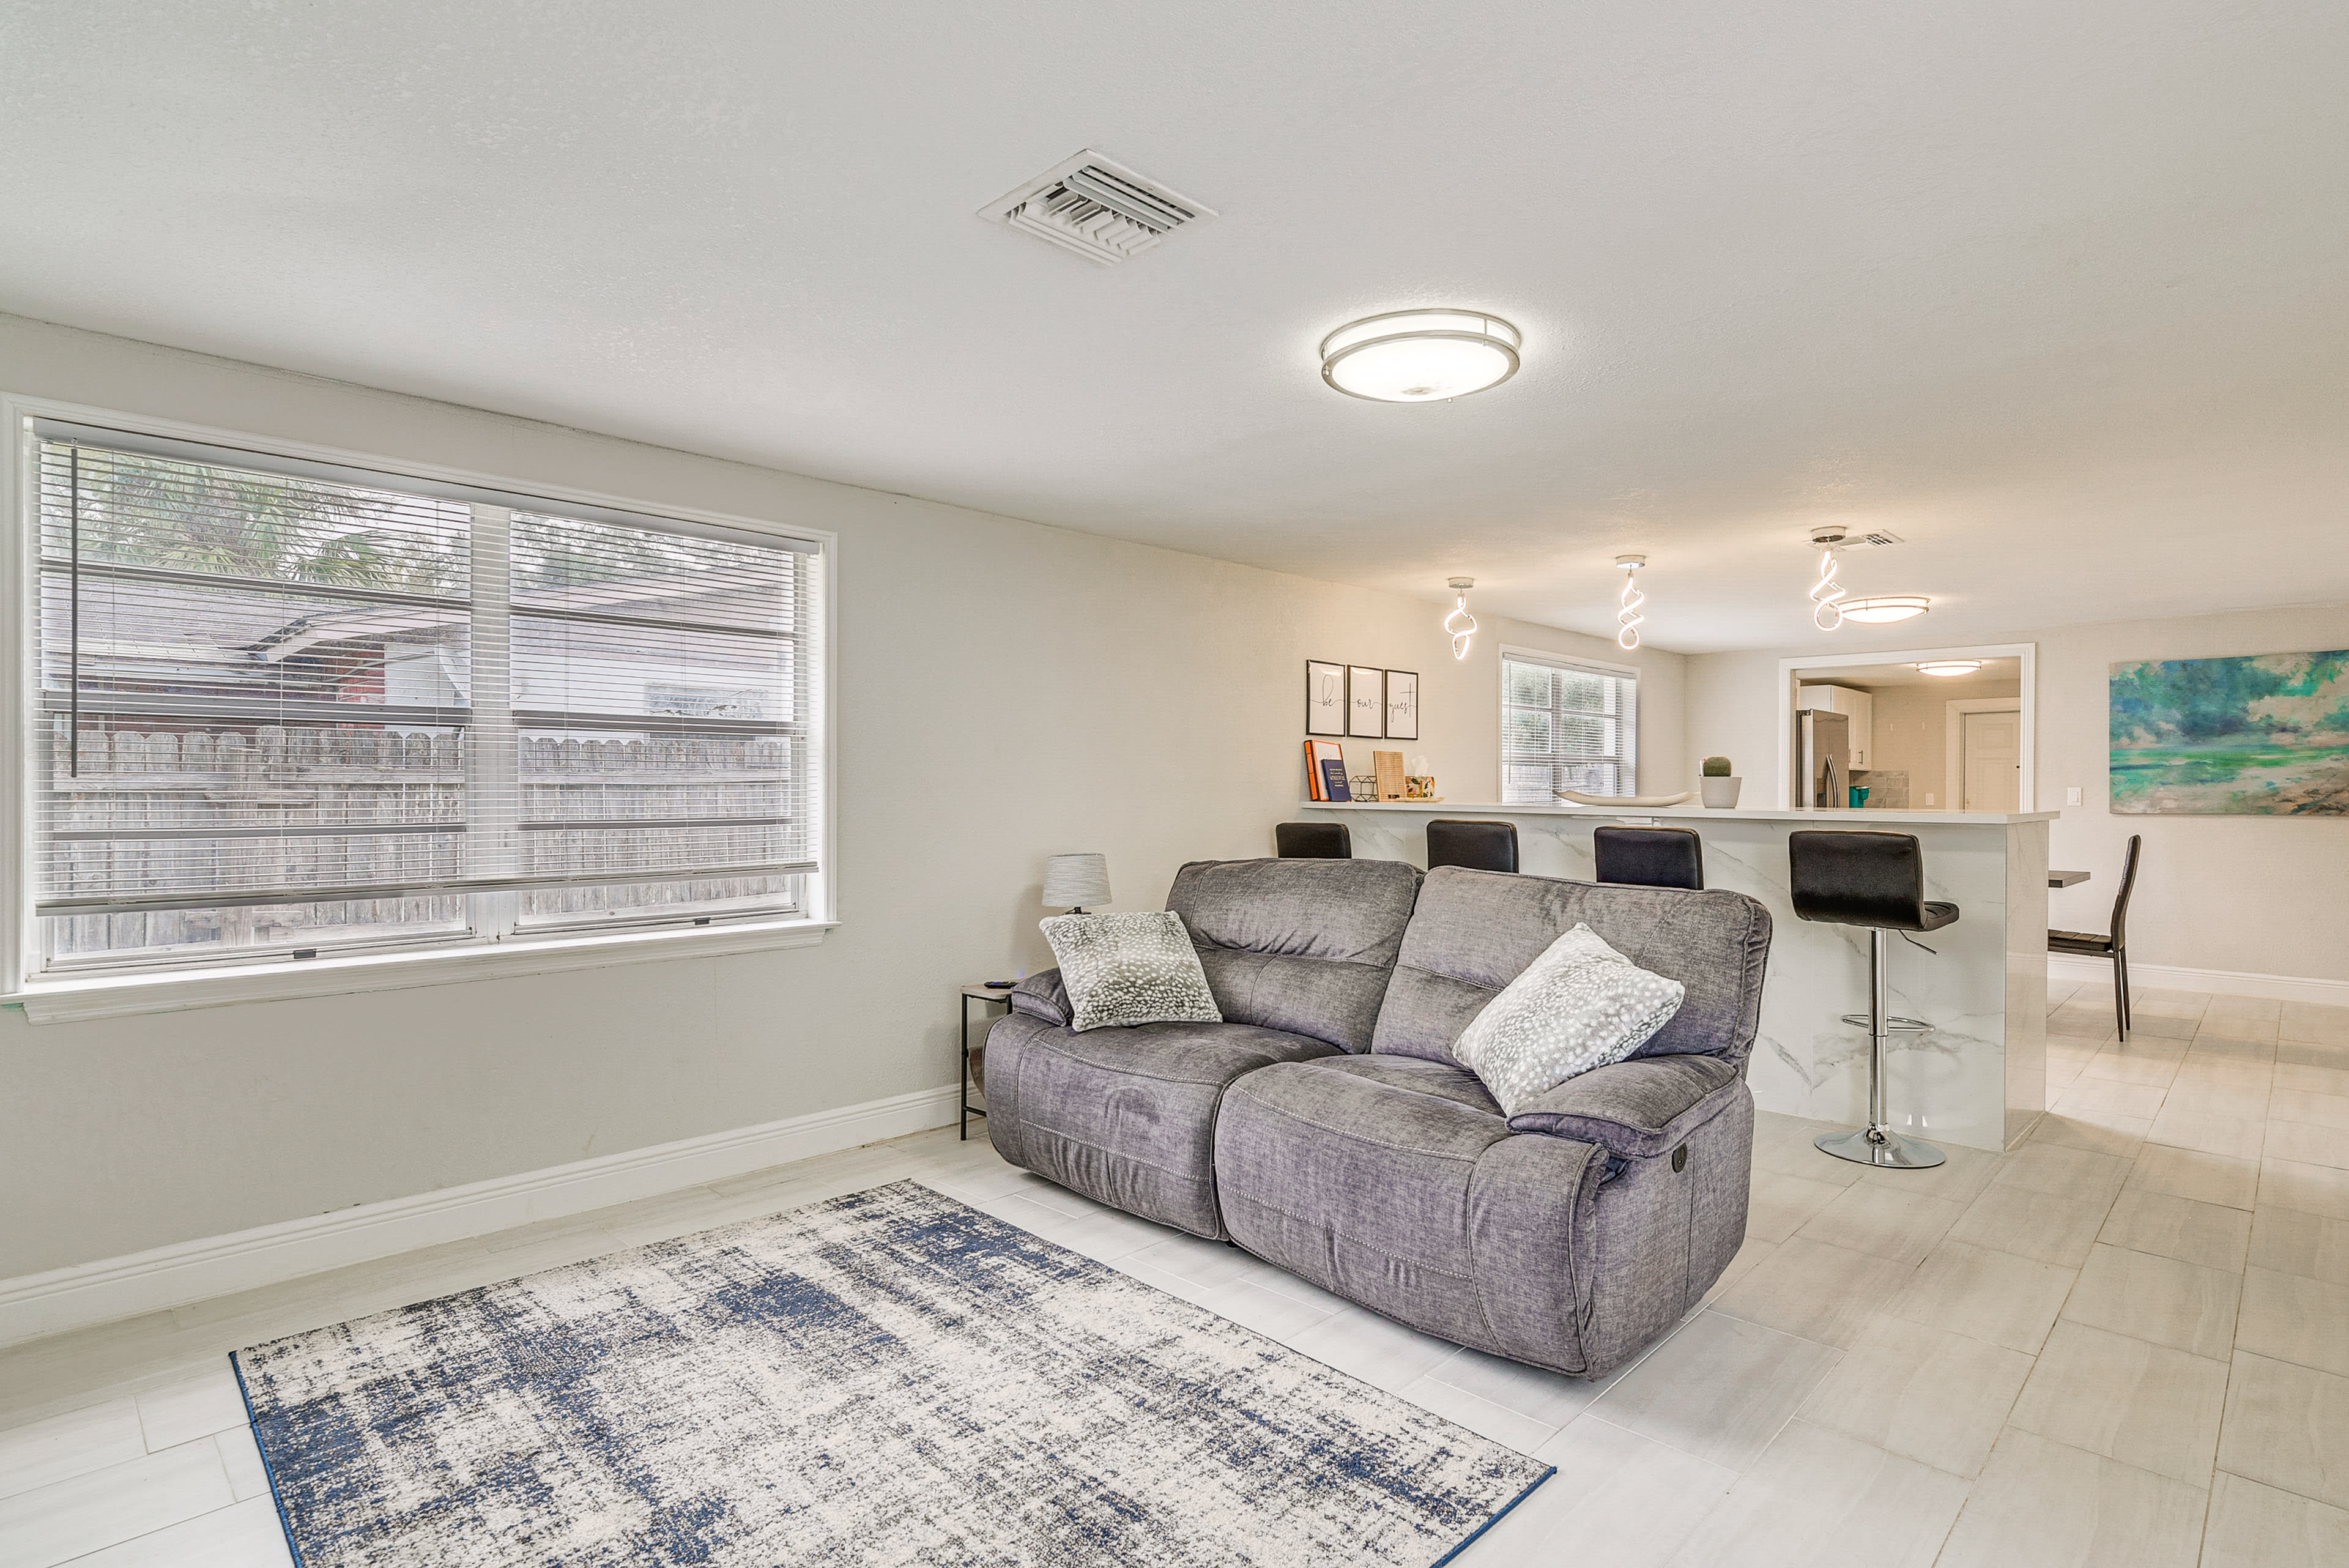 Living Room | Main Floor | Central Air Conditioning | Smart TV